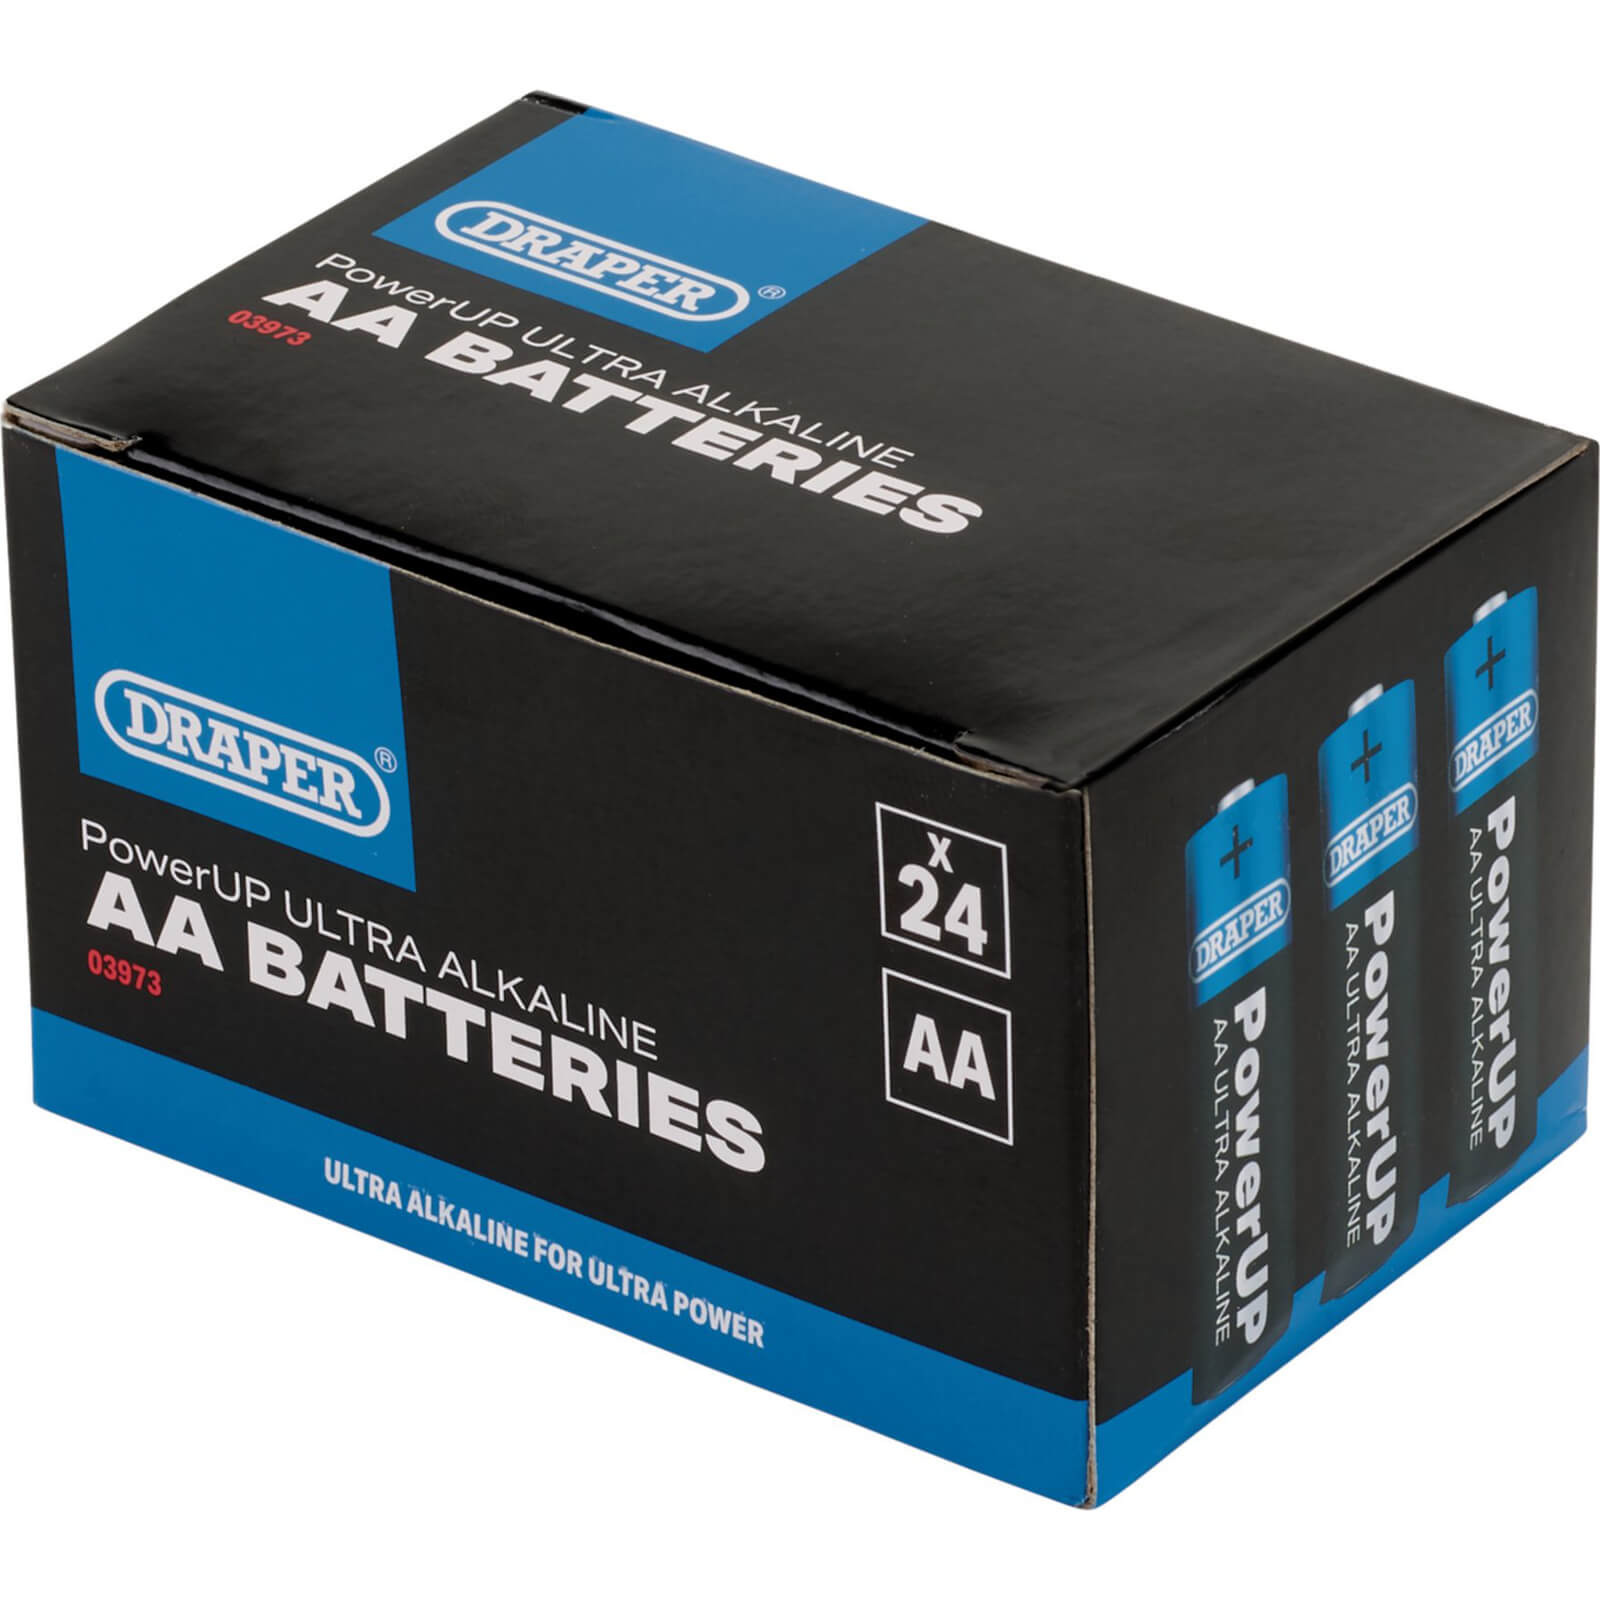 Image of Draper Powerup Ultra Alkaline AA Batteries Pack of 24